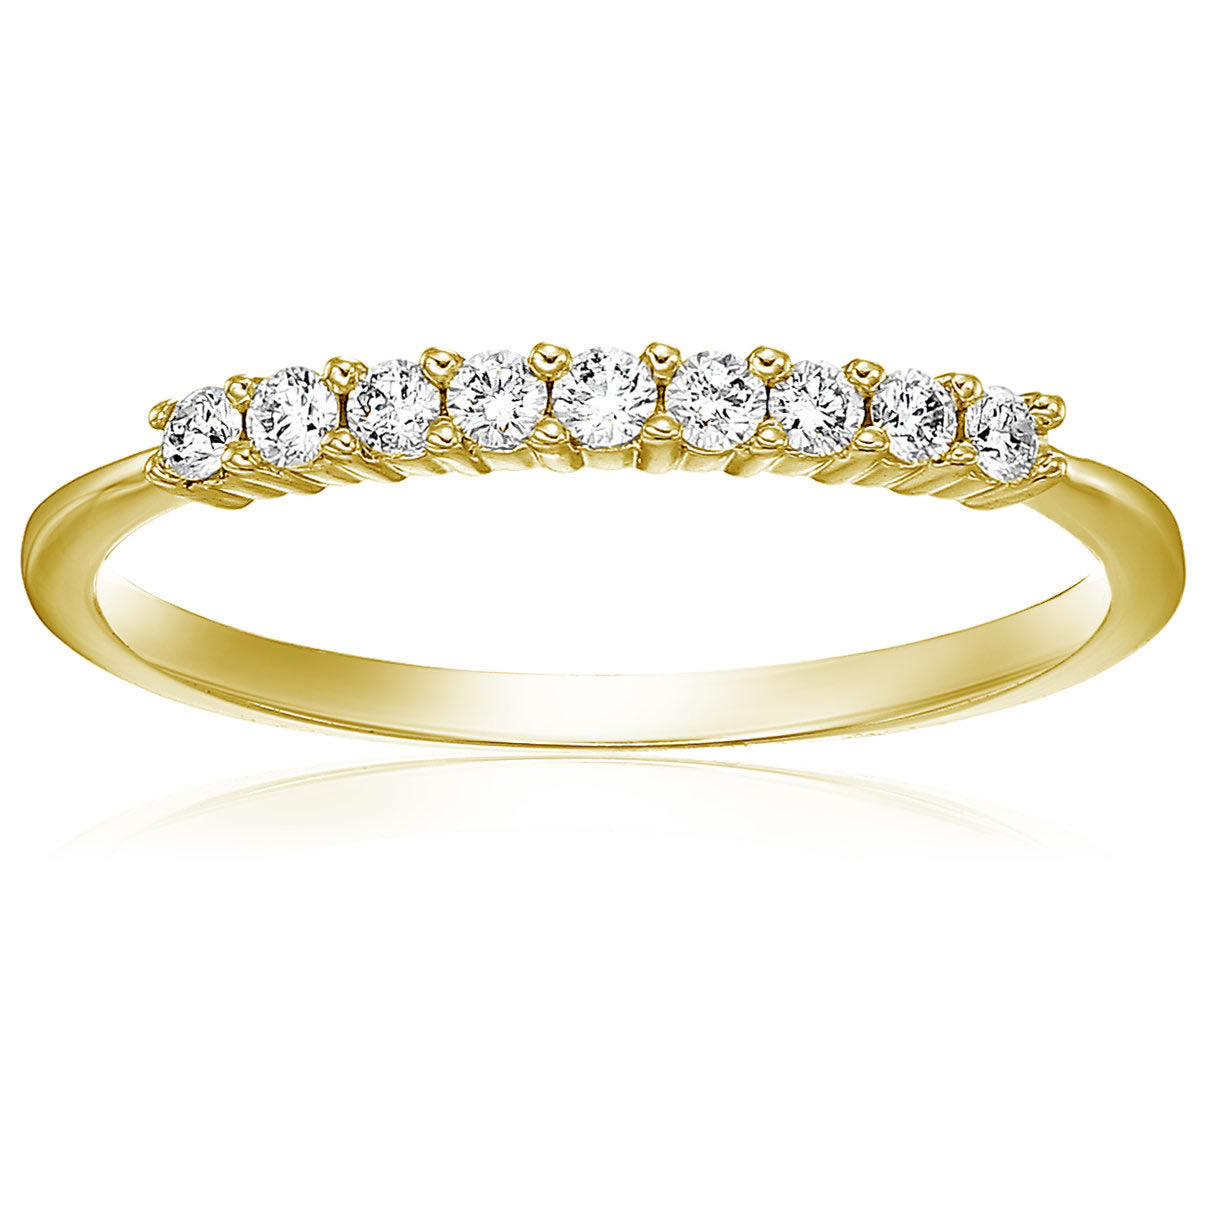 1/4 cttw Round Diamond Wedding Band for Women in 10K White Gold 9 Stones, Size 5-9